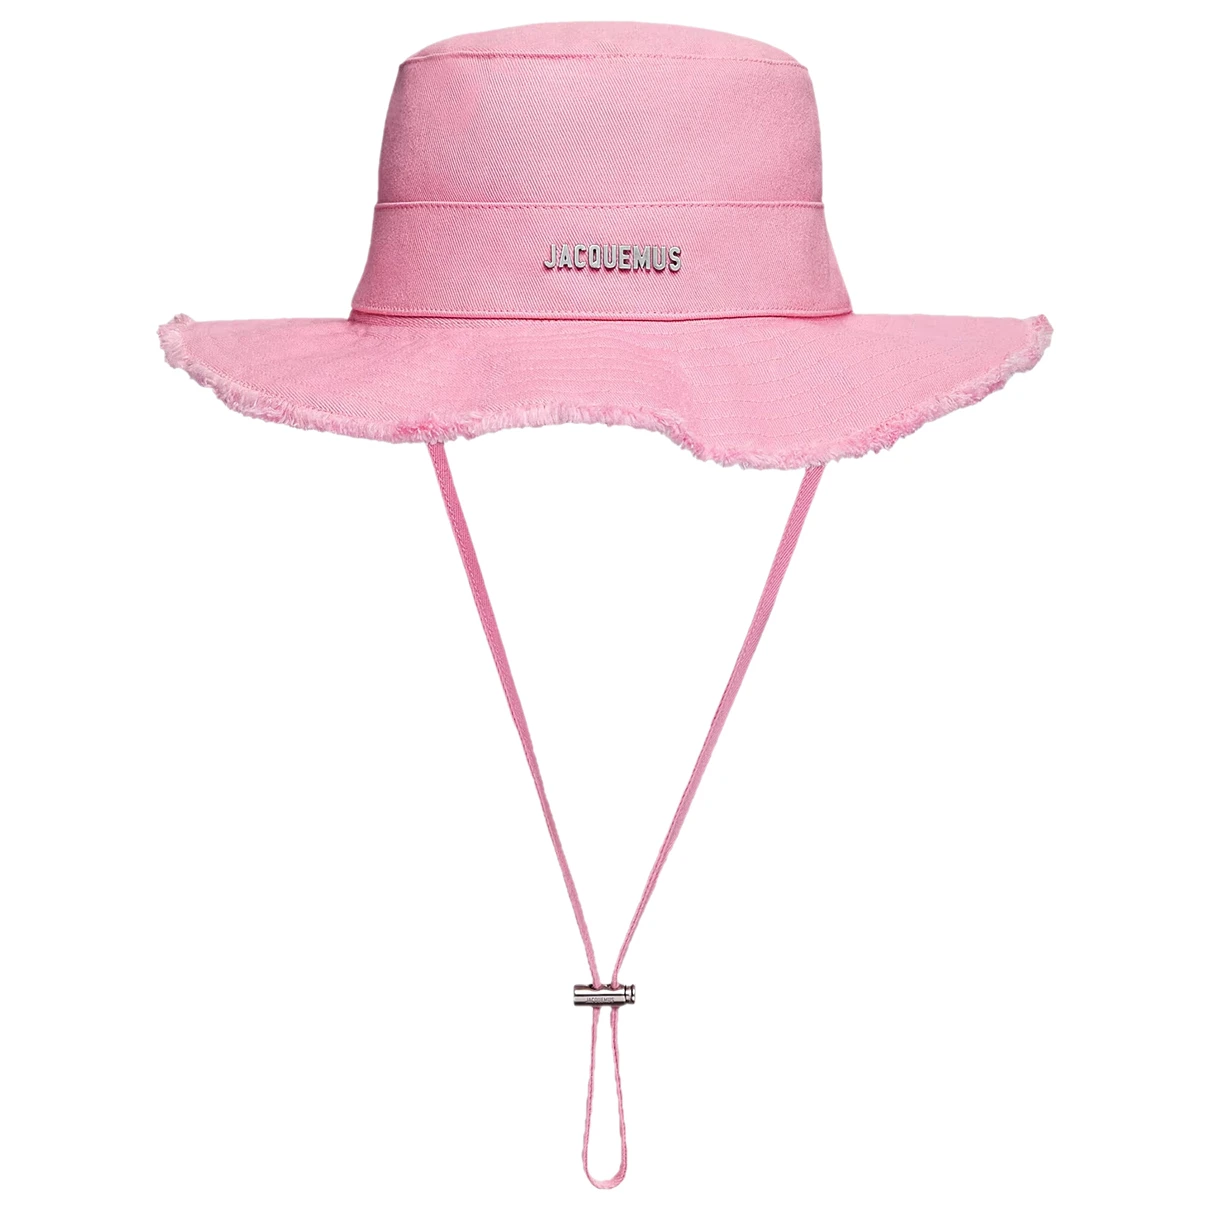 accessories Jacquemus hats Le Bob Artichaut for Female Cotton 58 cm. Used condition